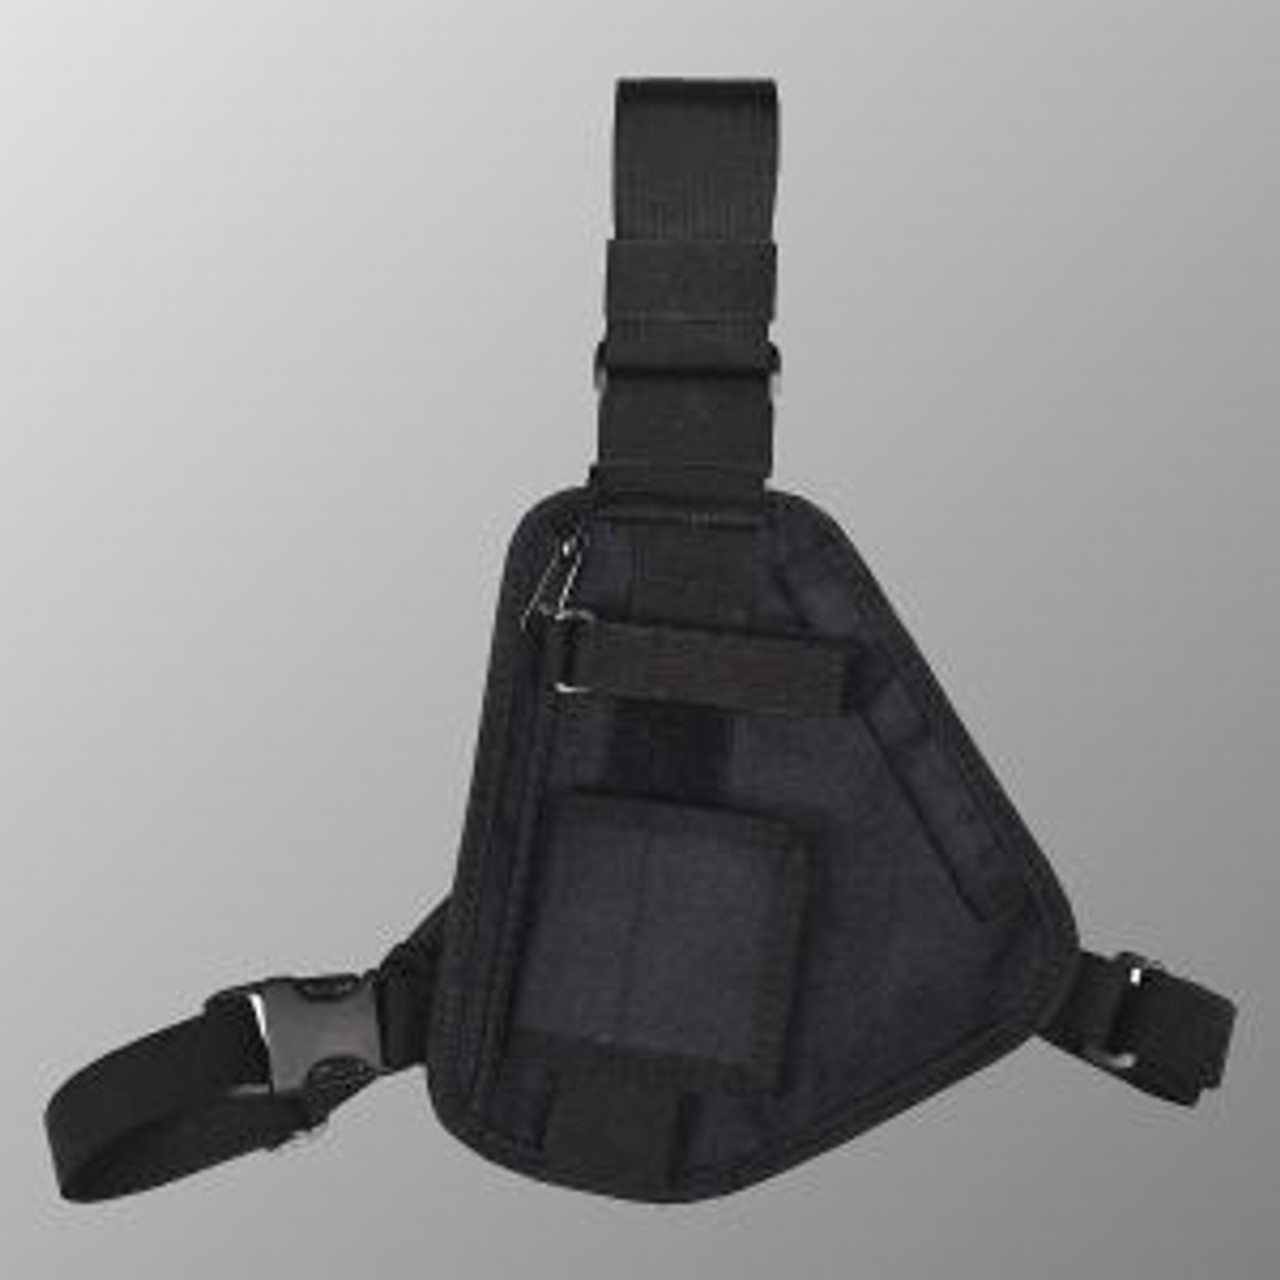 Vertex Standard VX-800 3-Point Chest Harness - Black